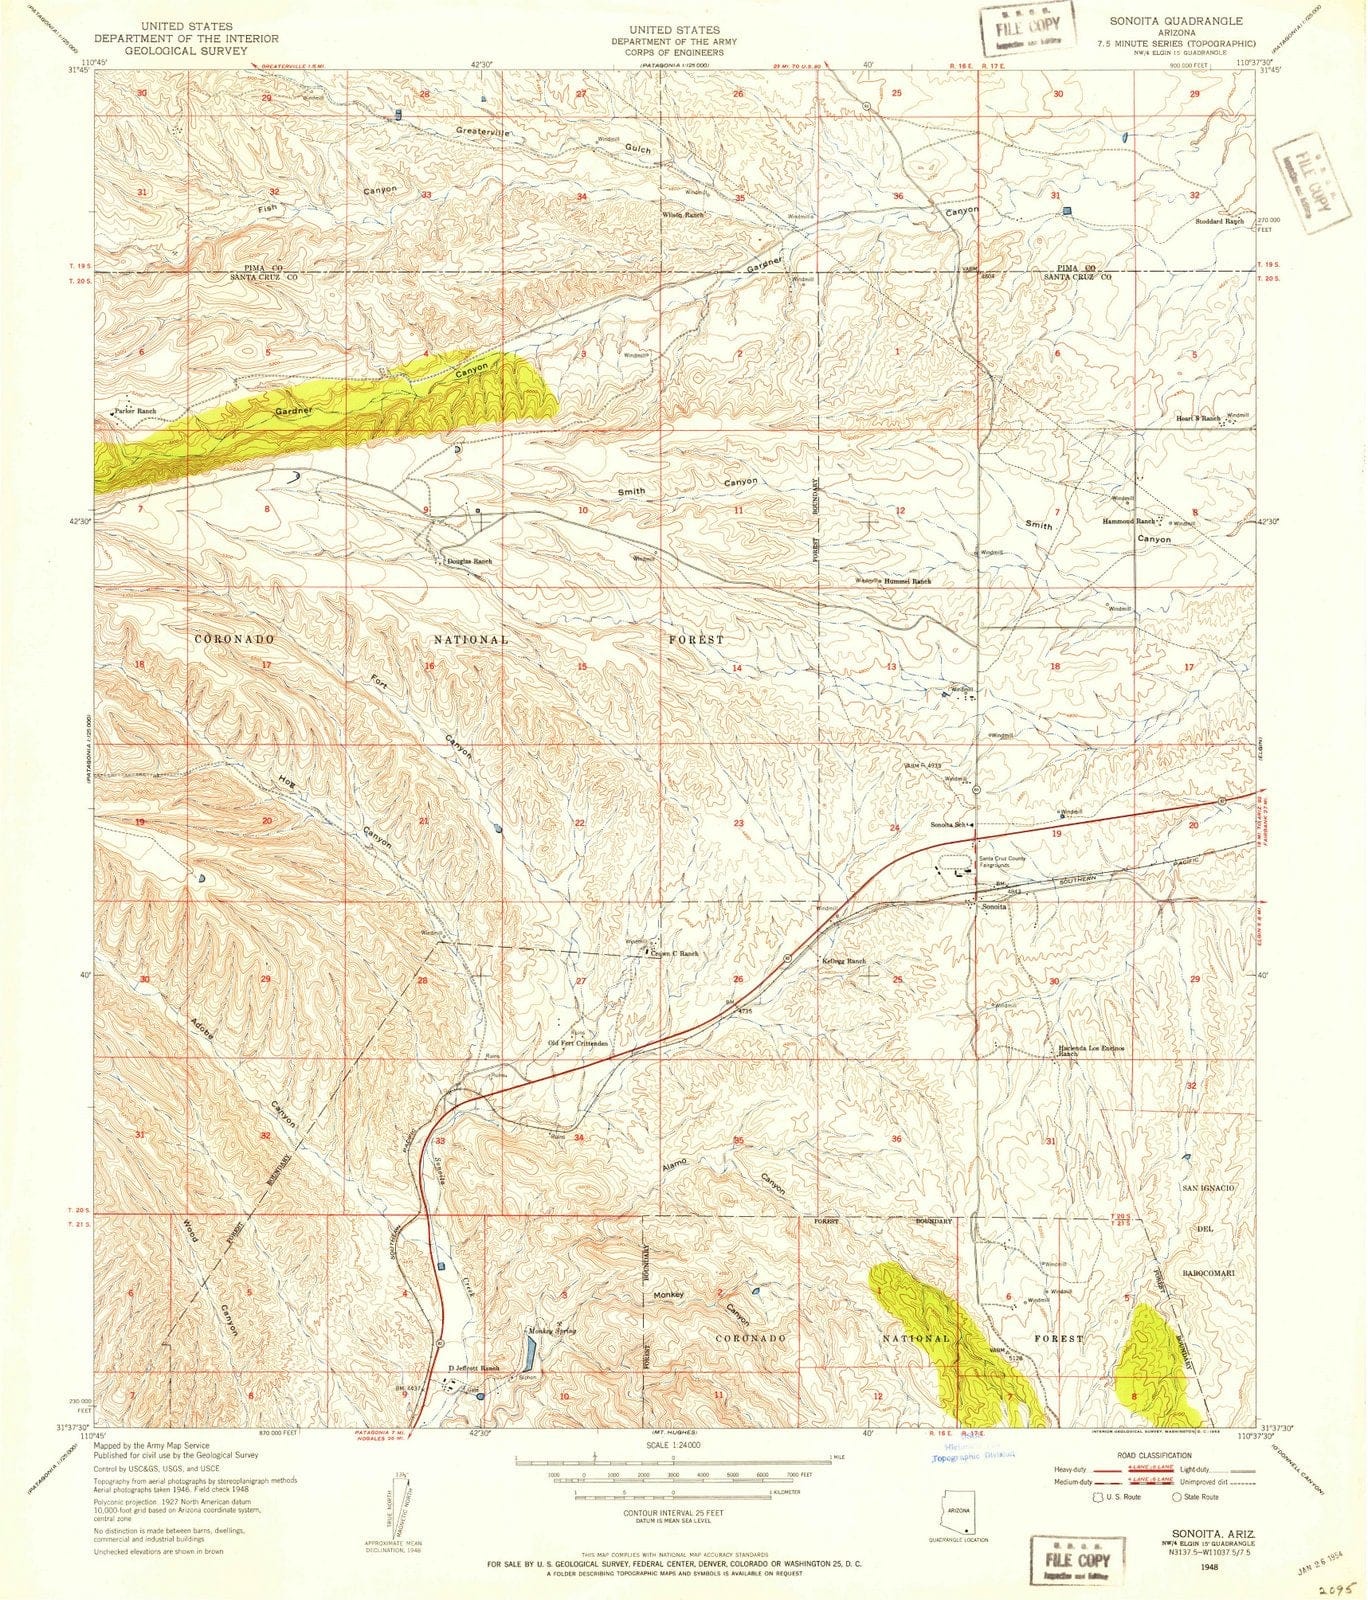 1948 Sonoita, AZ - Arizona - USGS Topographic Map